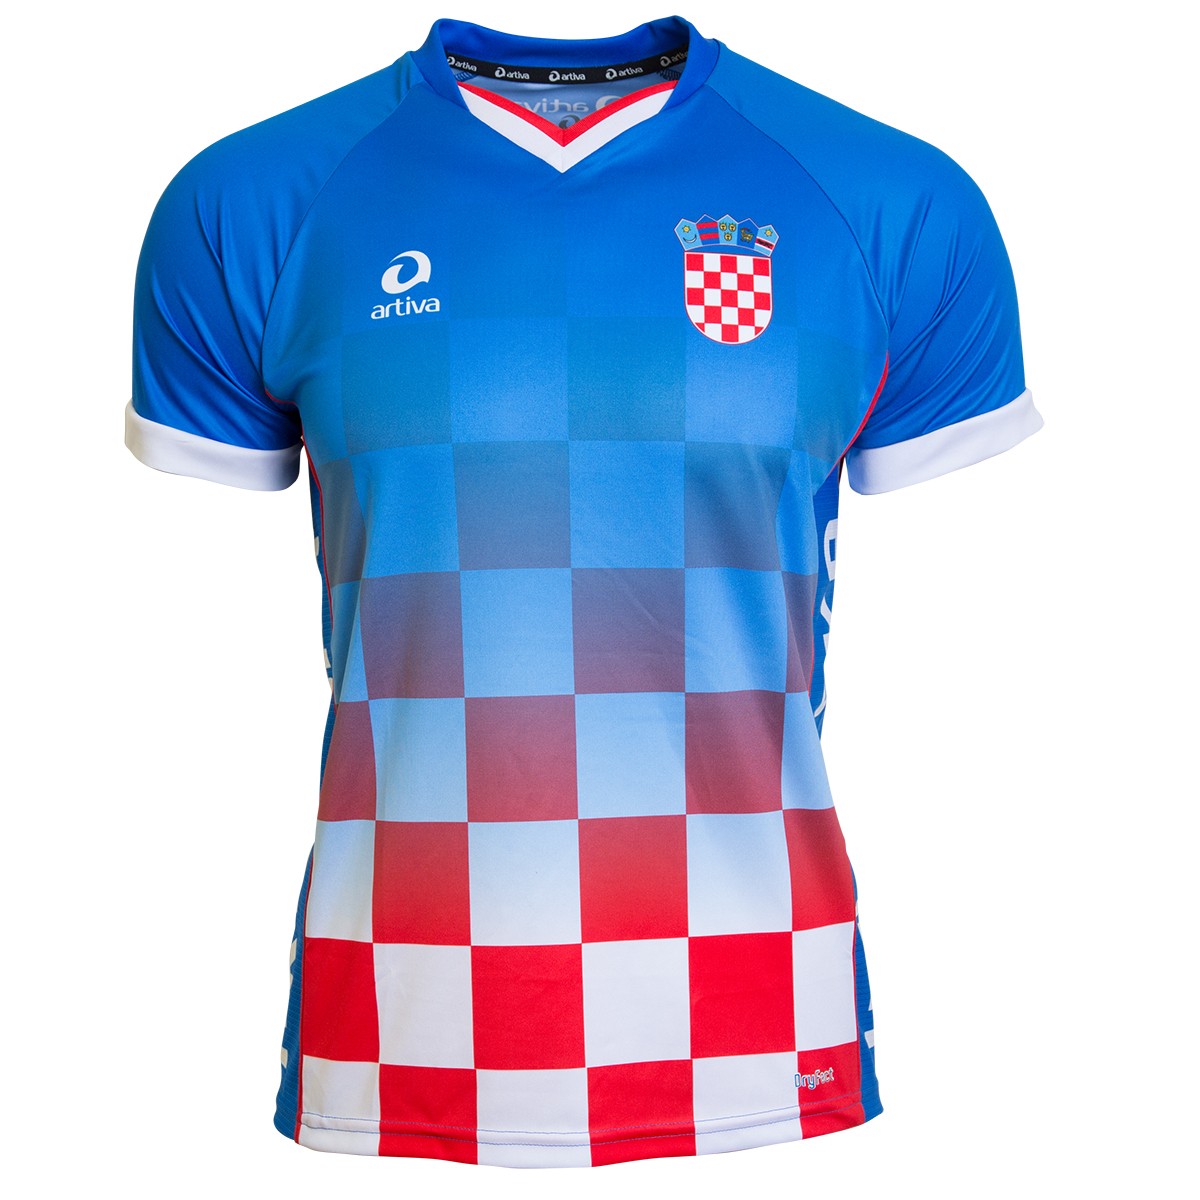 Kroatien-Trikot für Kinder. Fan-Trikot Kroatien für Olympia und WM 2018